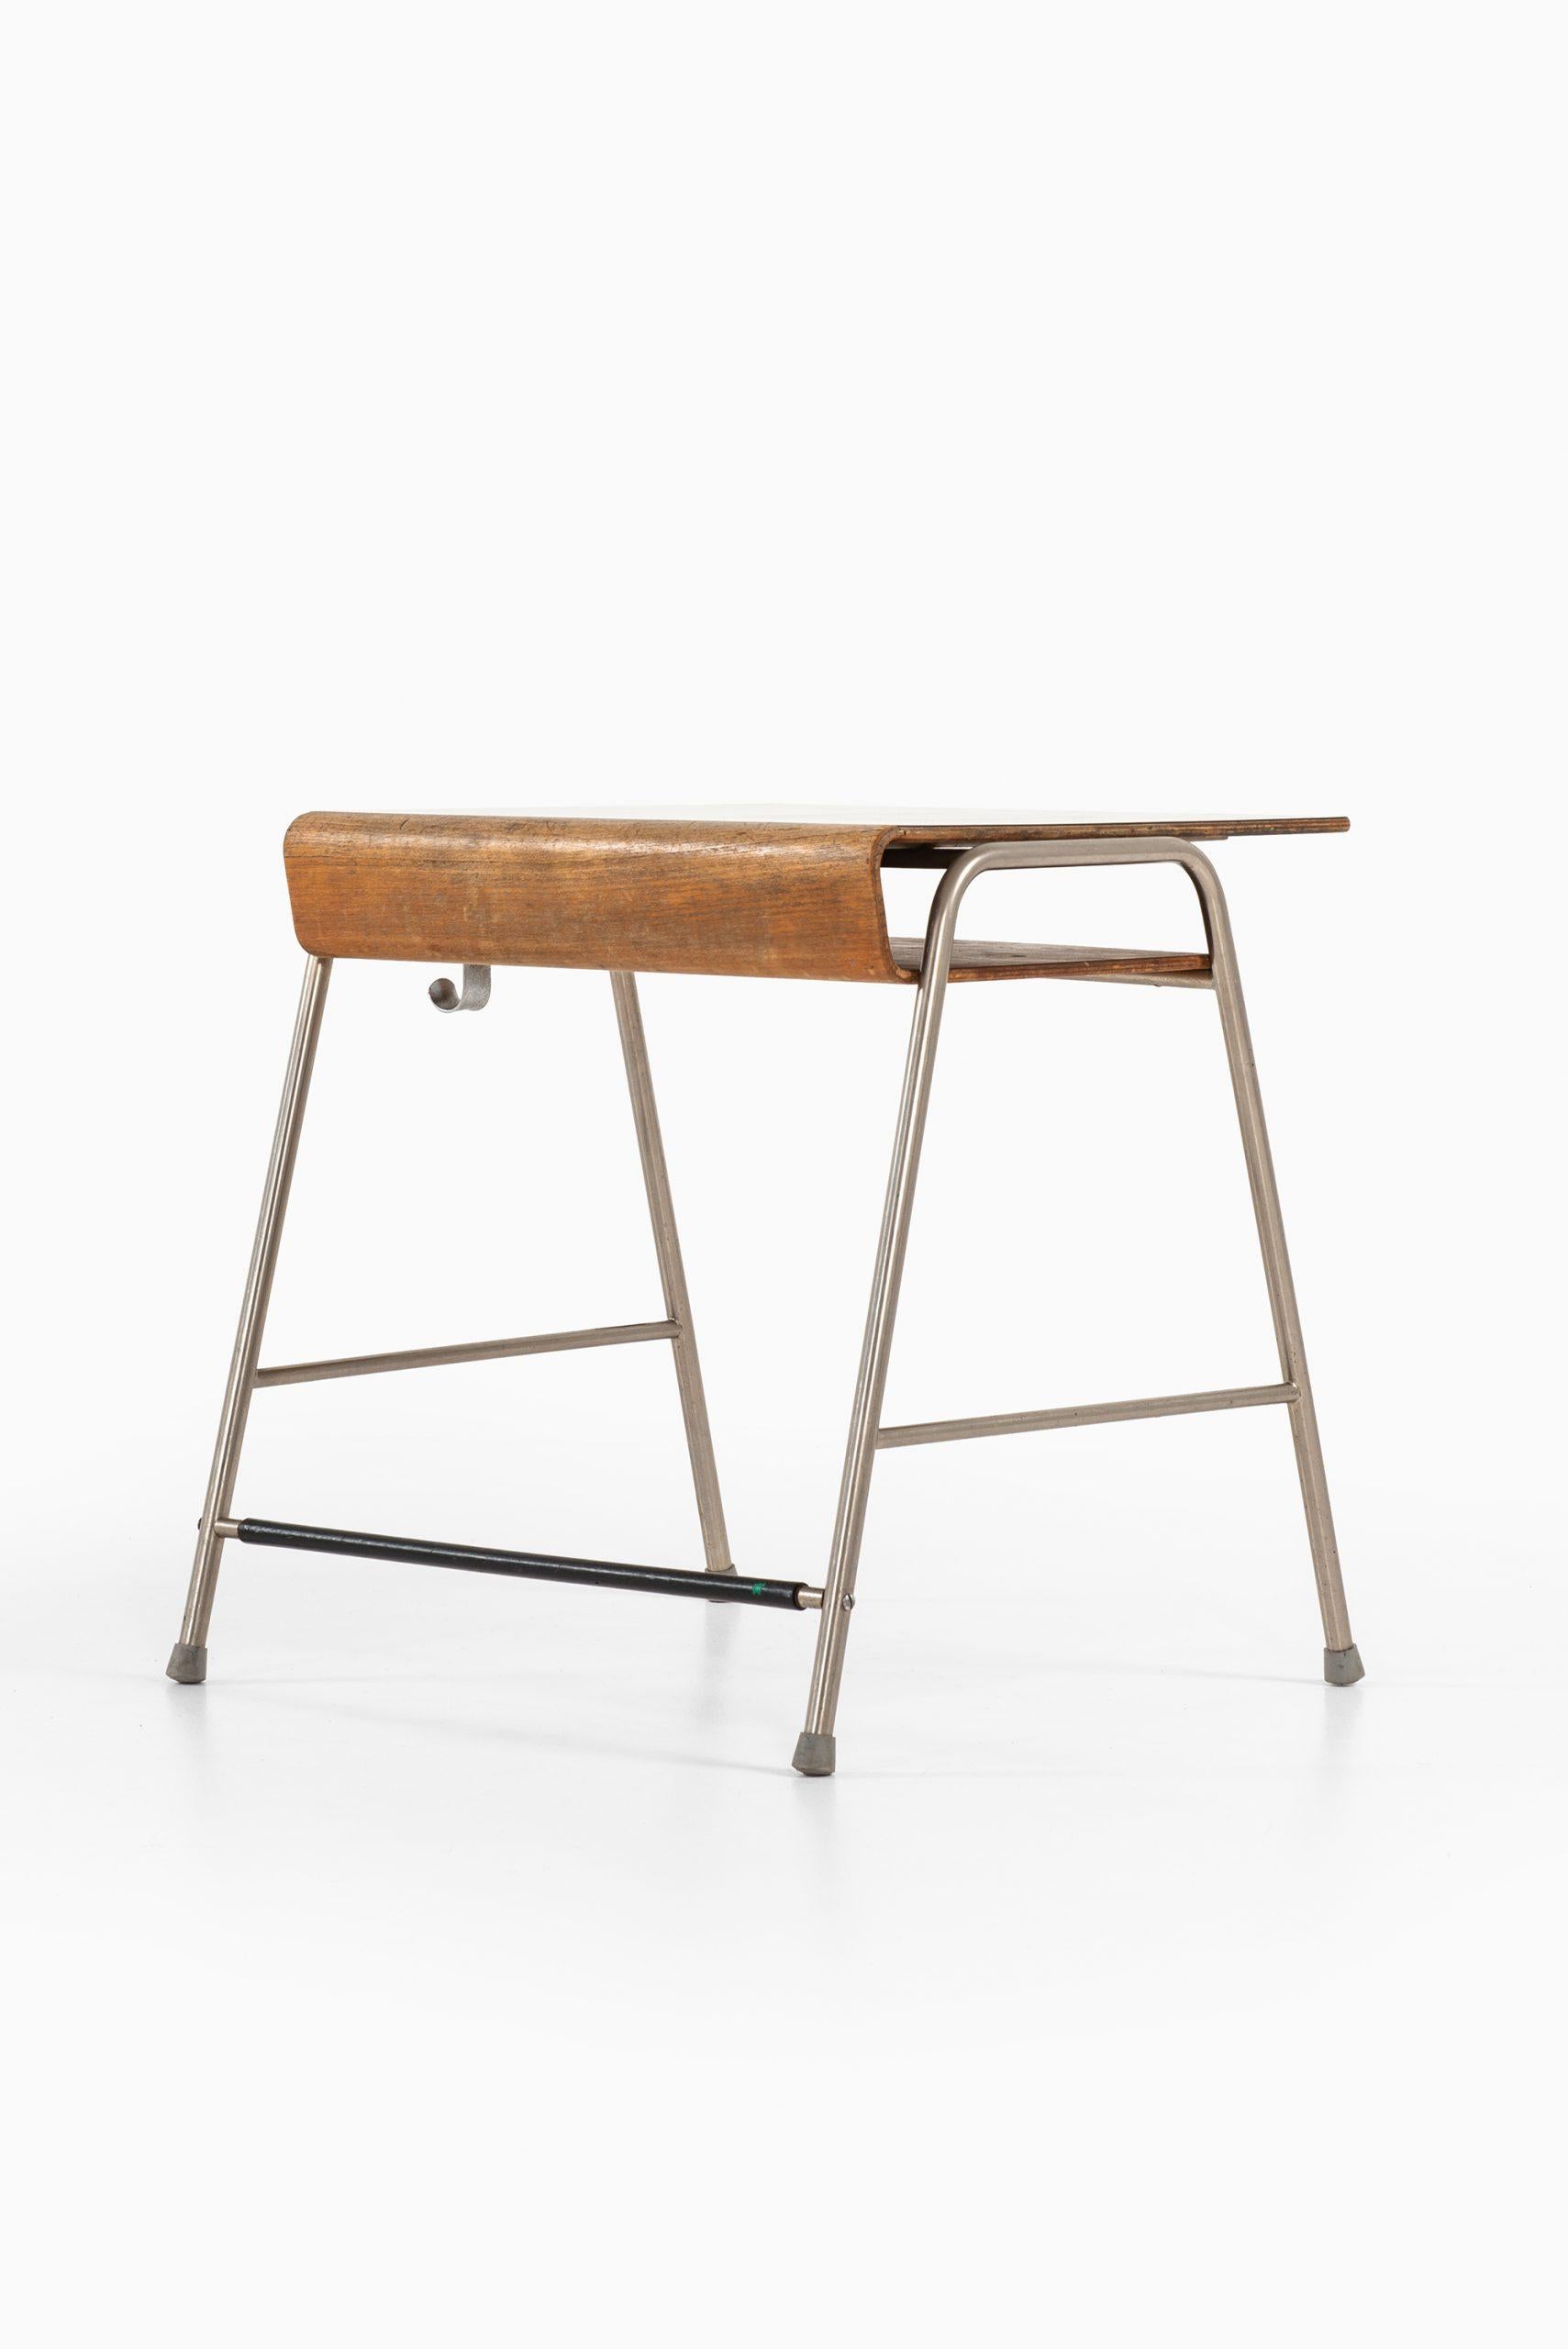 Danish Arne Jacobsen Munkegaard School Desk Produced by Fritz Hansen in Denmark For Sale